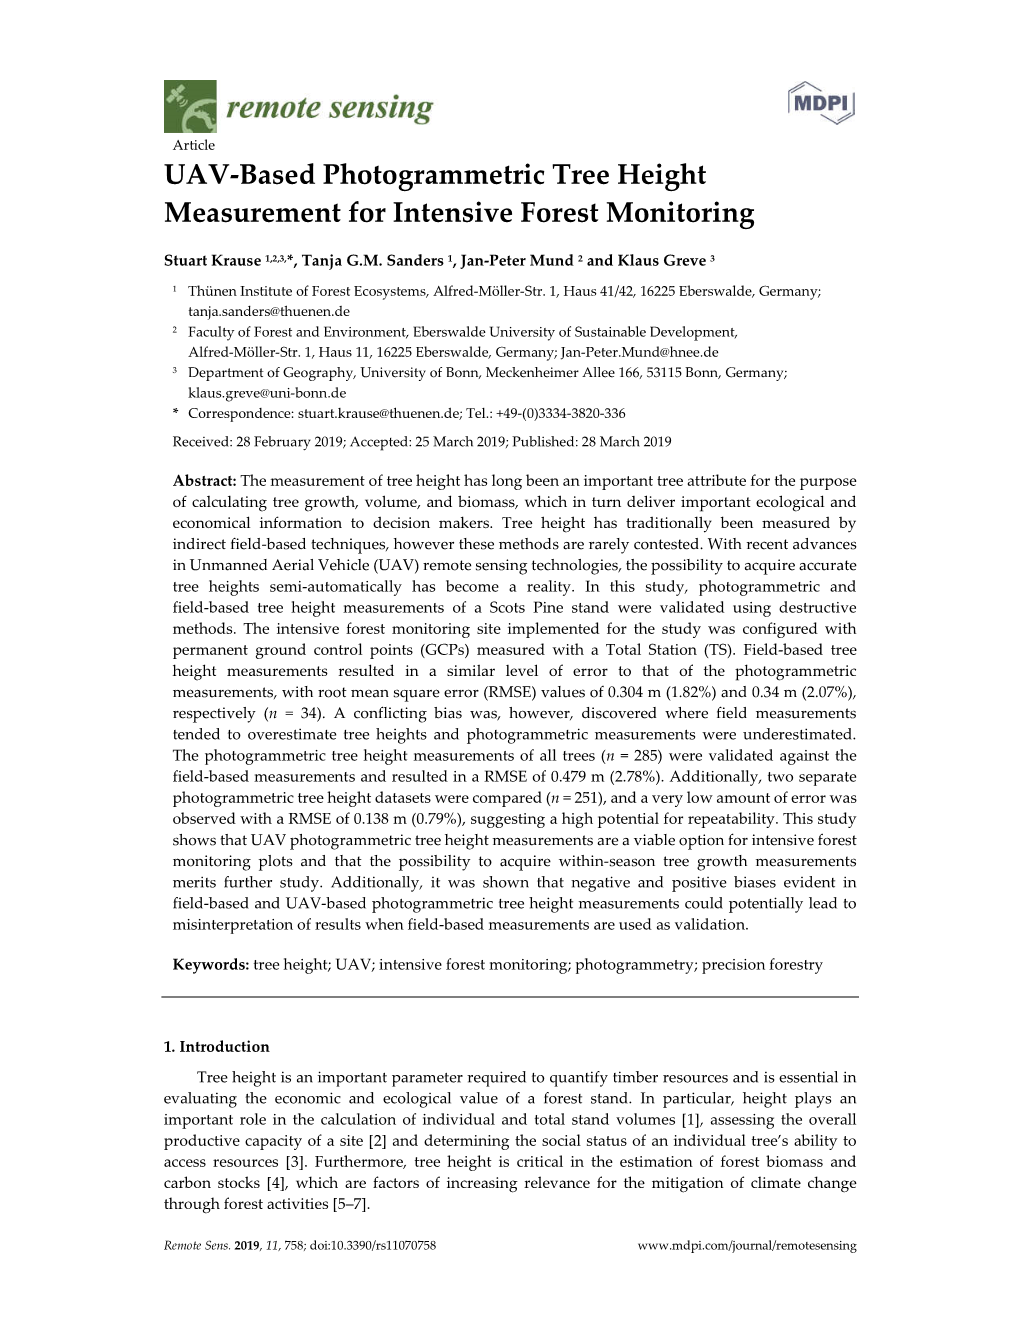 UAV-Based Photogrammetric Tree Height Measurement for Intensive Forest Monitoring